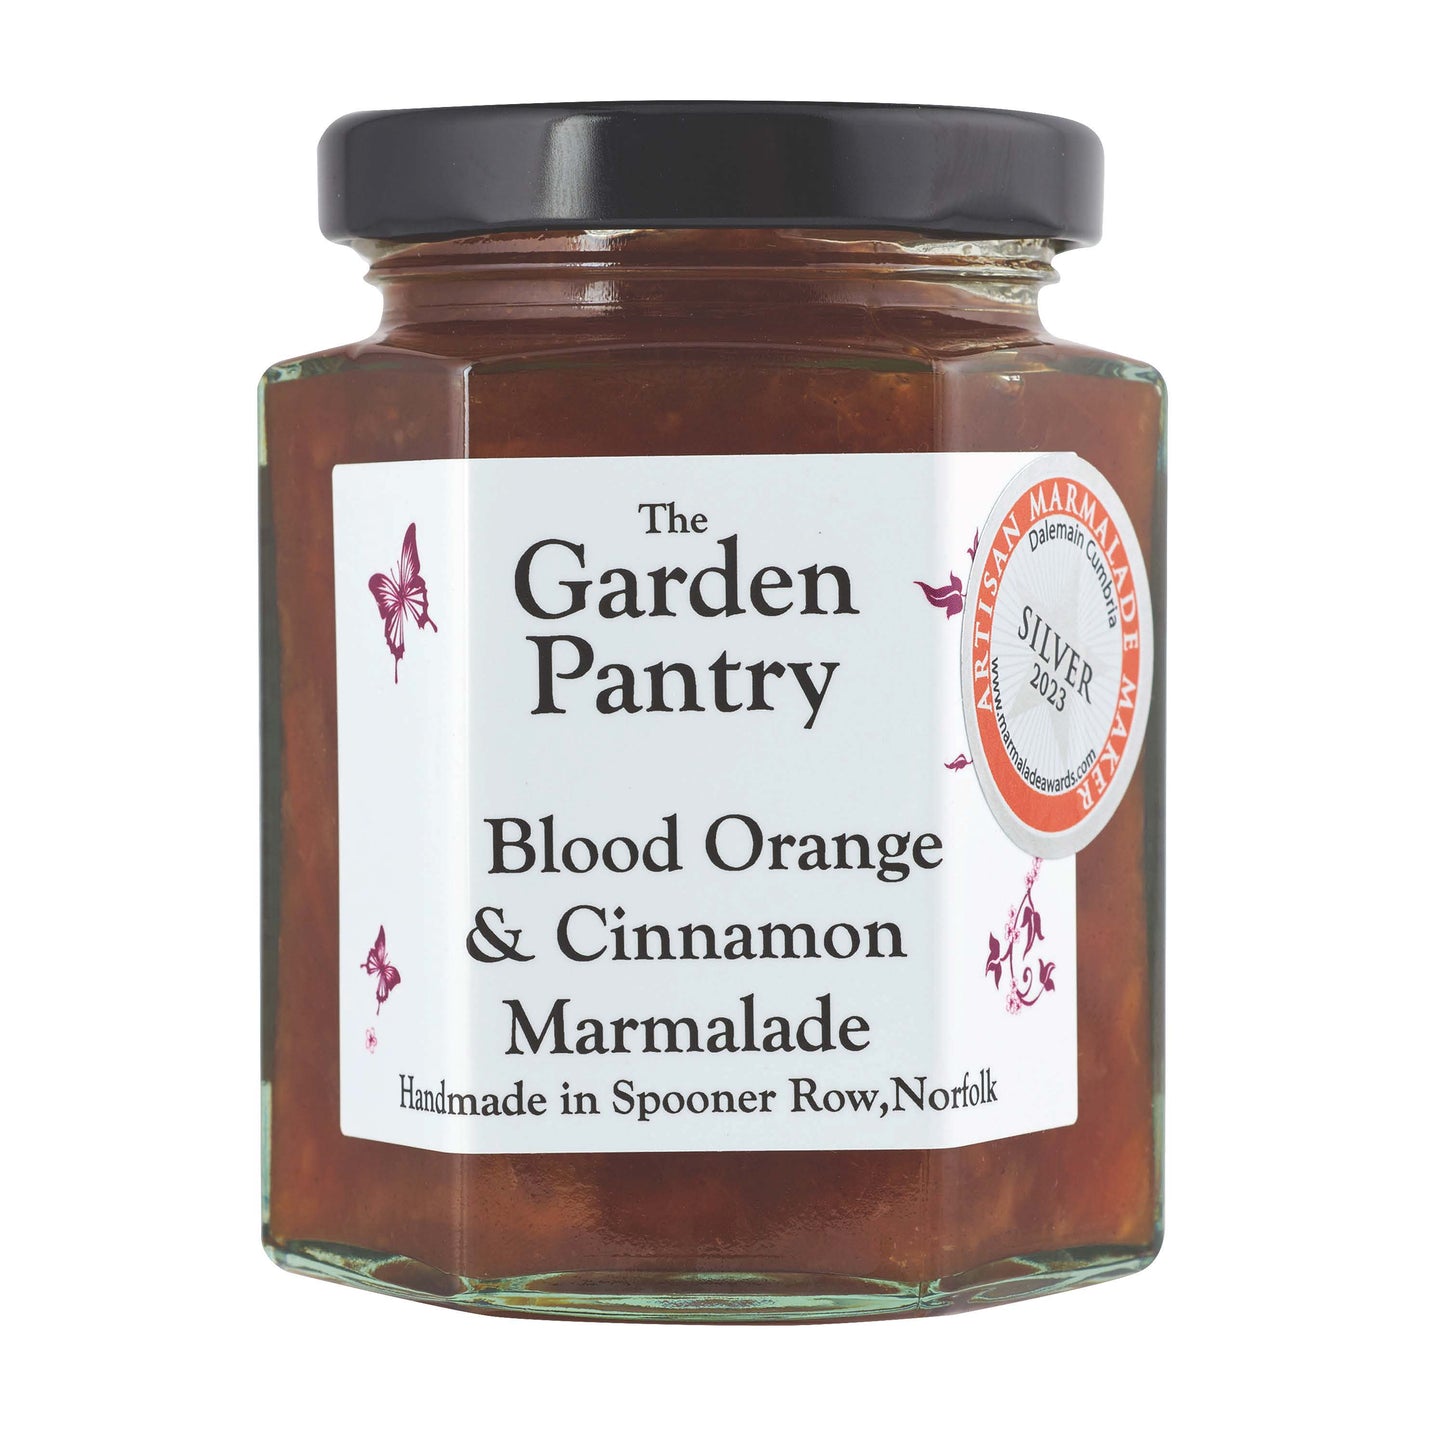 The Garden Pantry Blood Orange & Cinnamon Marmalade